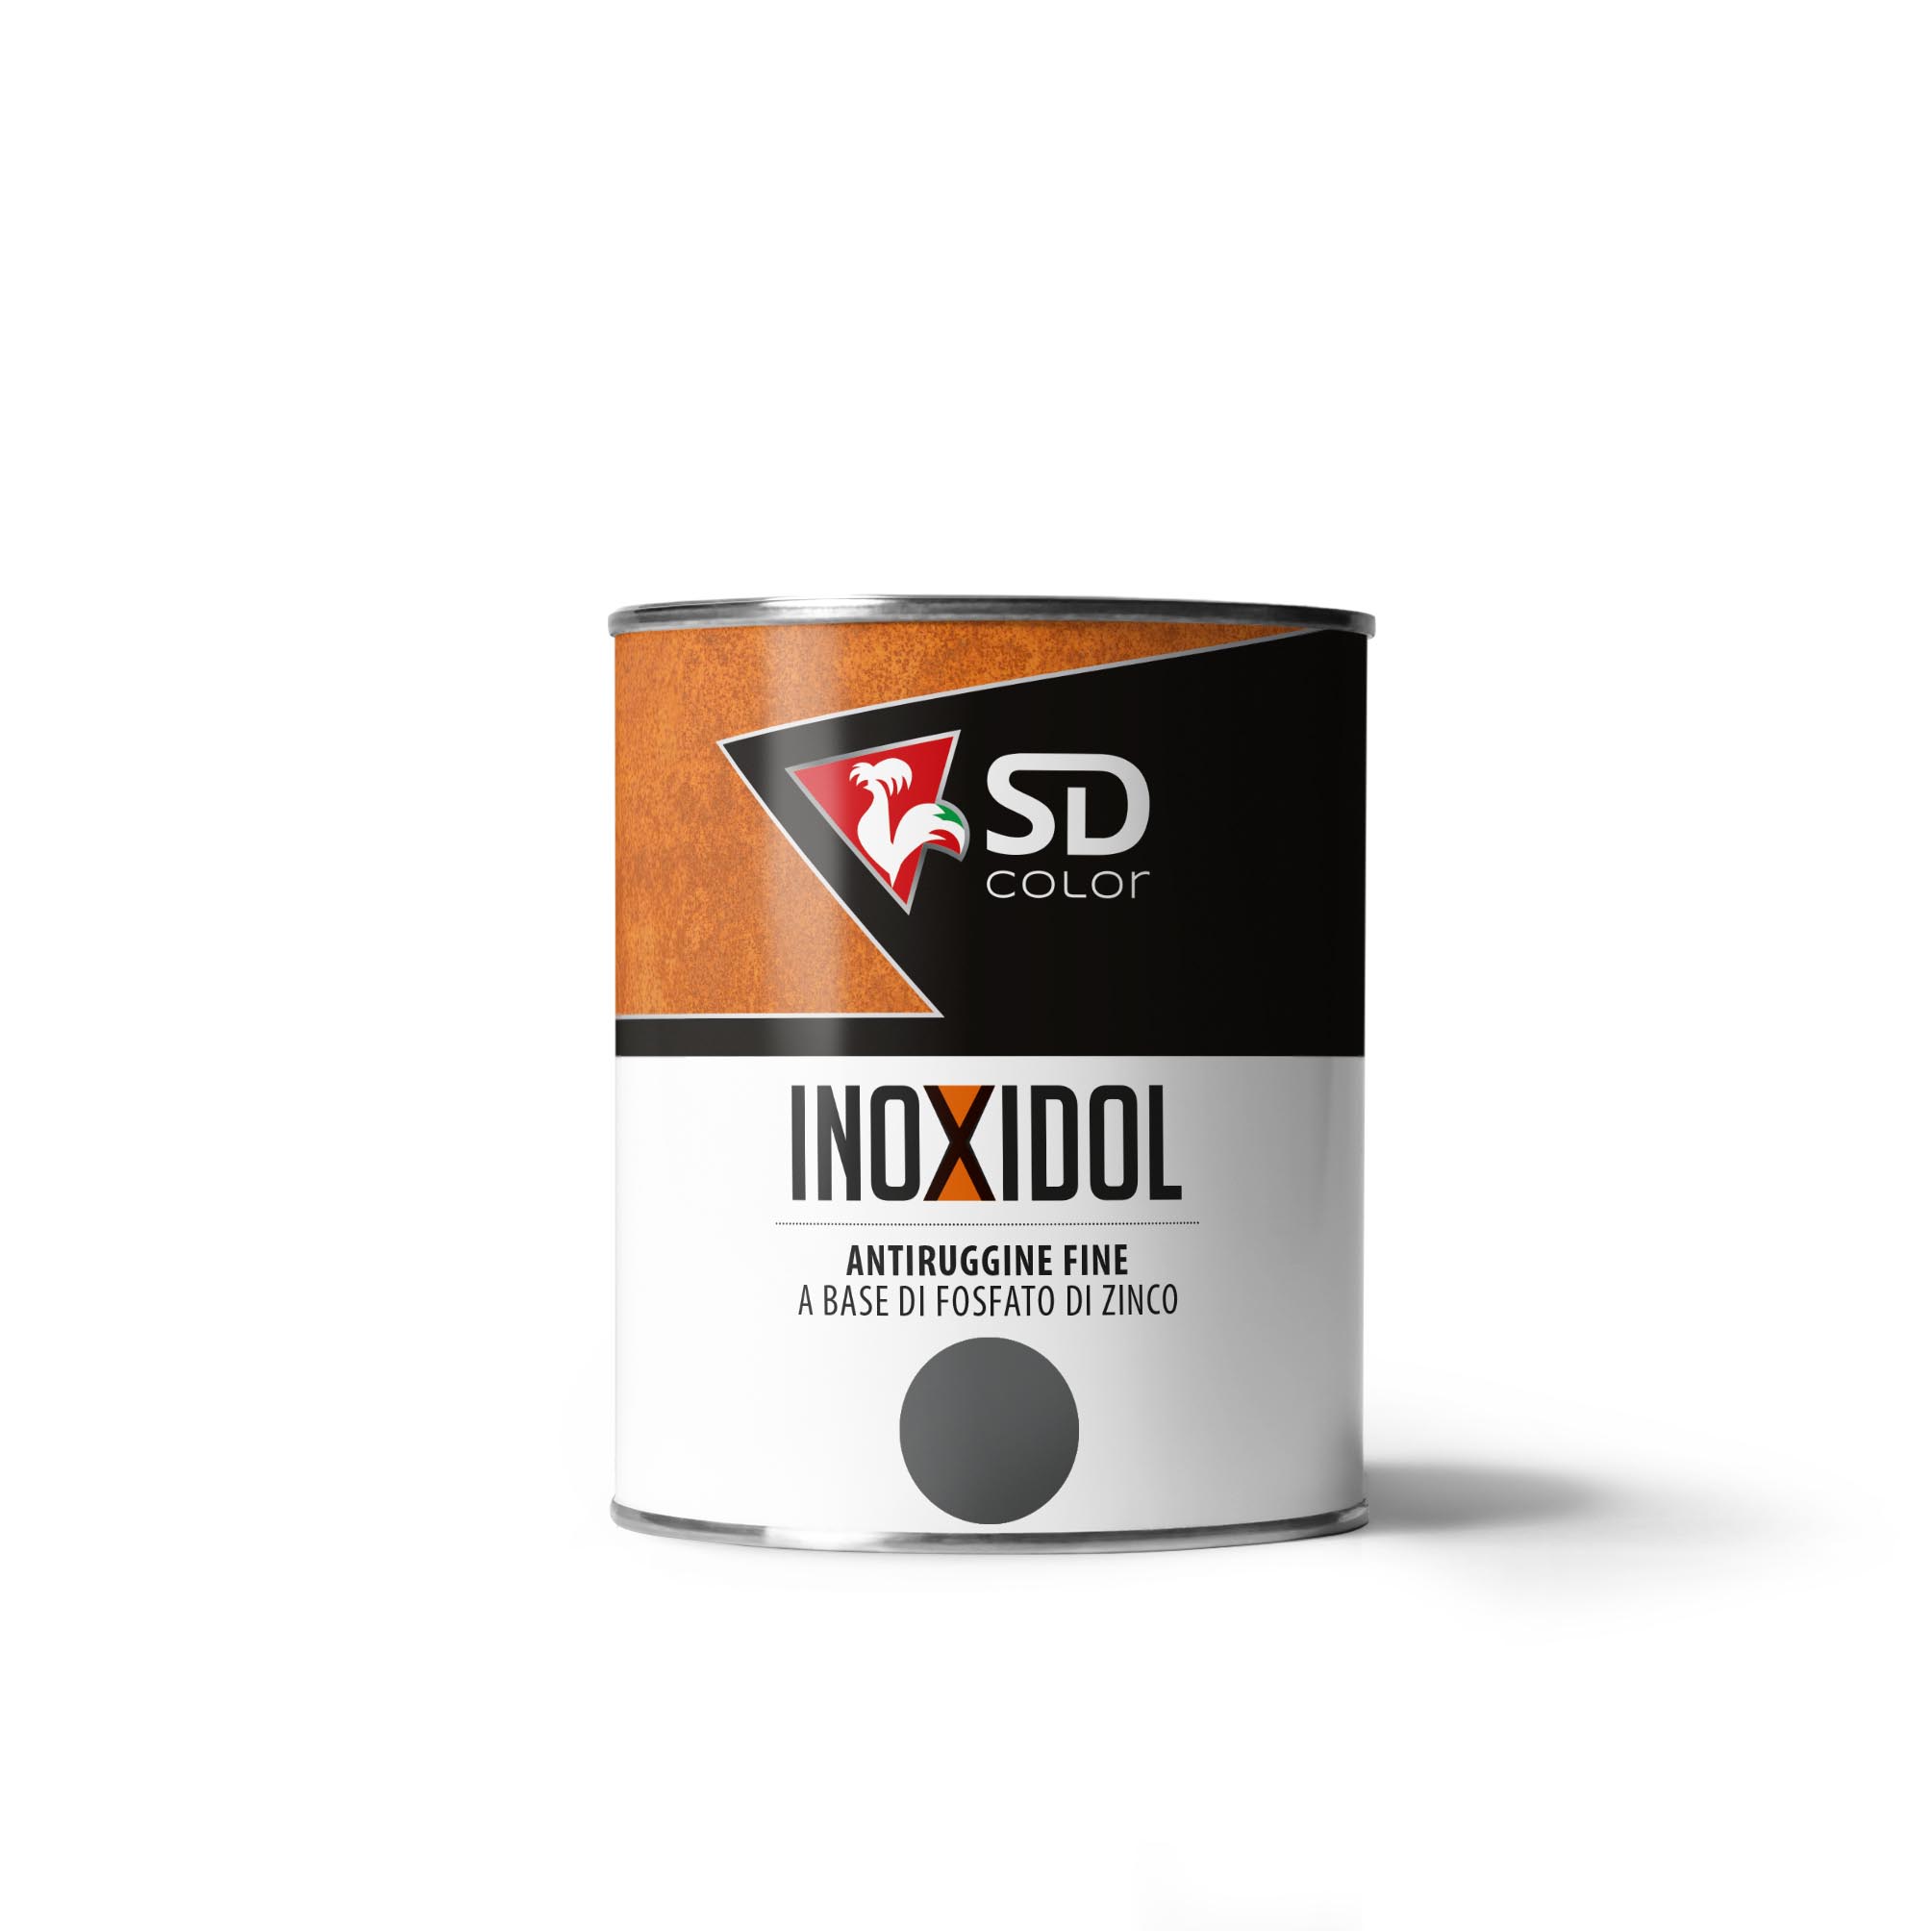 packaging sd color latta inoxidol